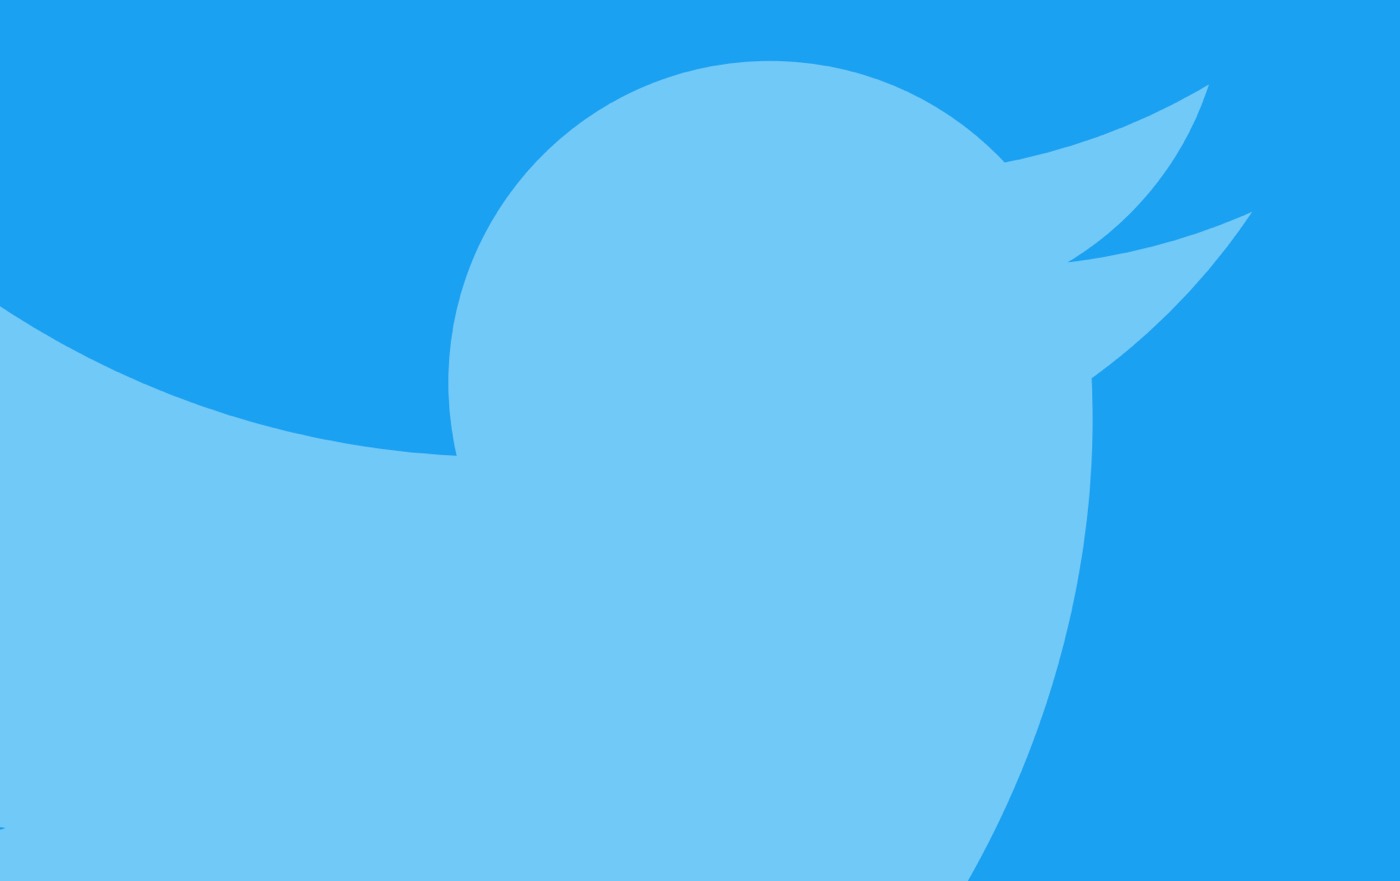 Twitterの日間アクティブユーザー数は1億8,600万人に − 業績はコロナの影響で減収